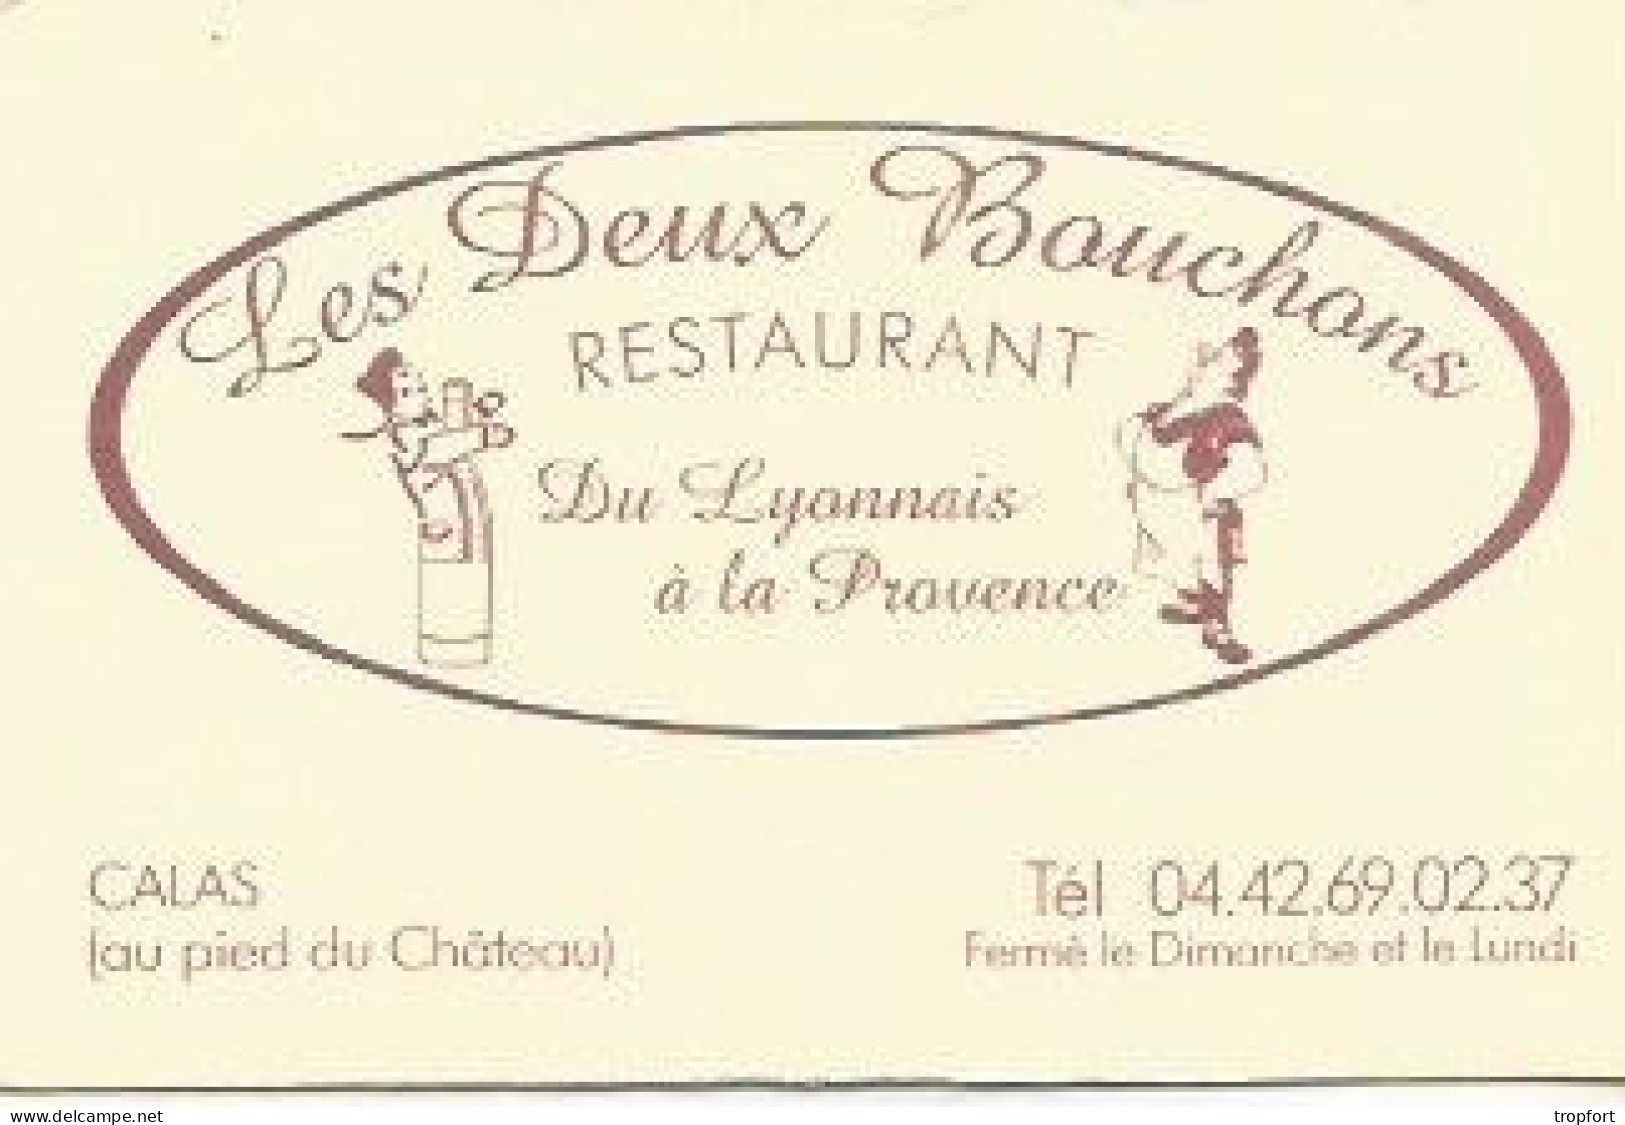 Carte De Visite Restaurant Les Deux Bouchons CALAS GUIGNOL - Tarjetas De Visita